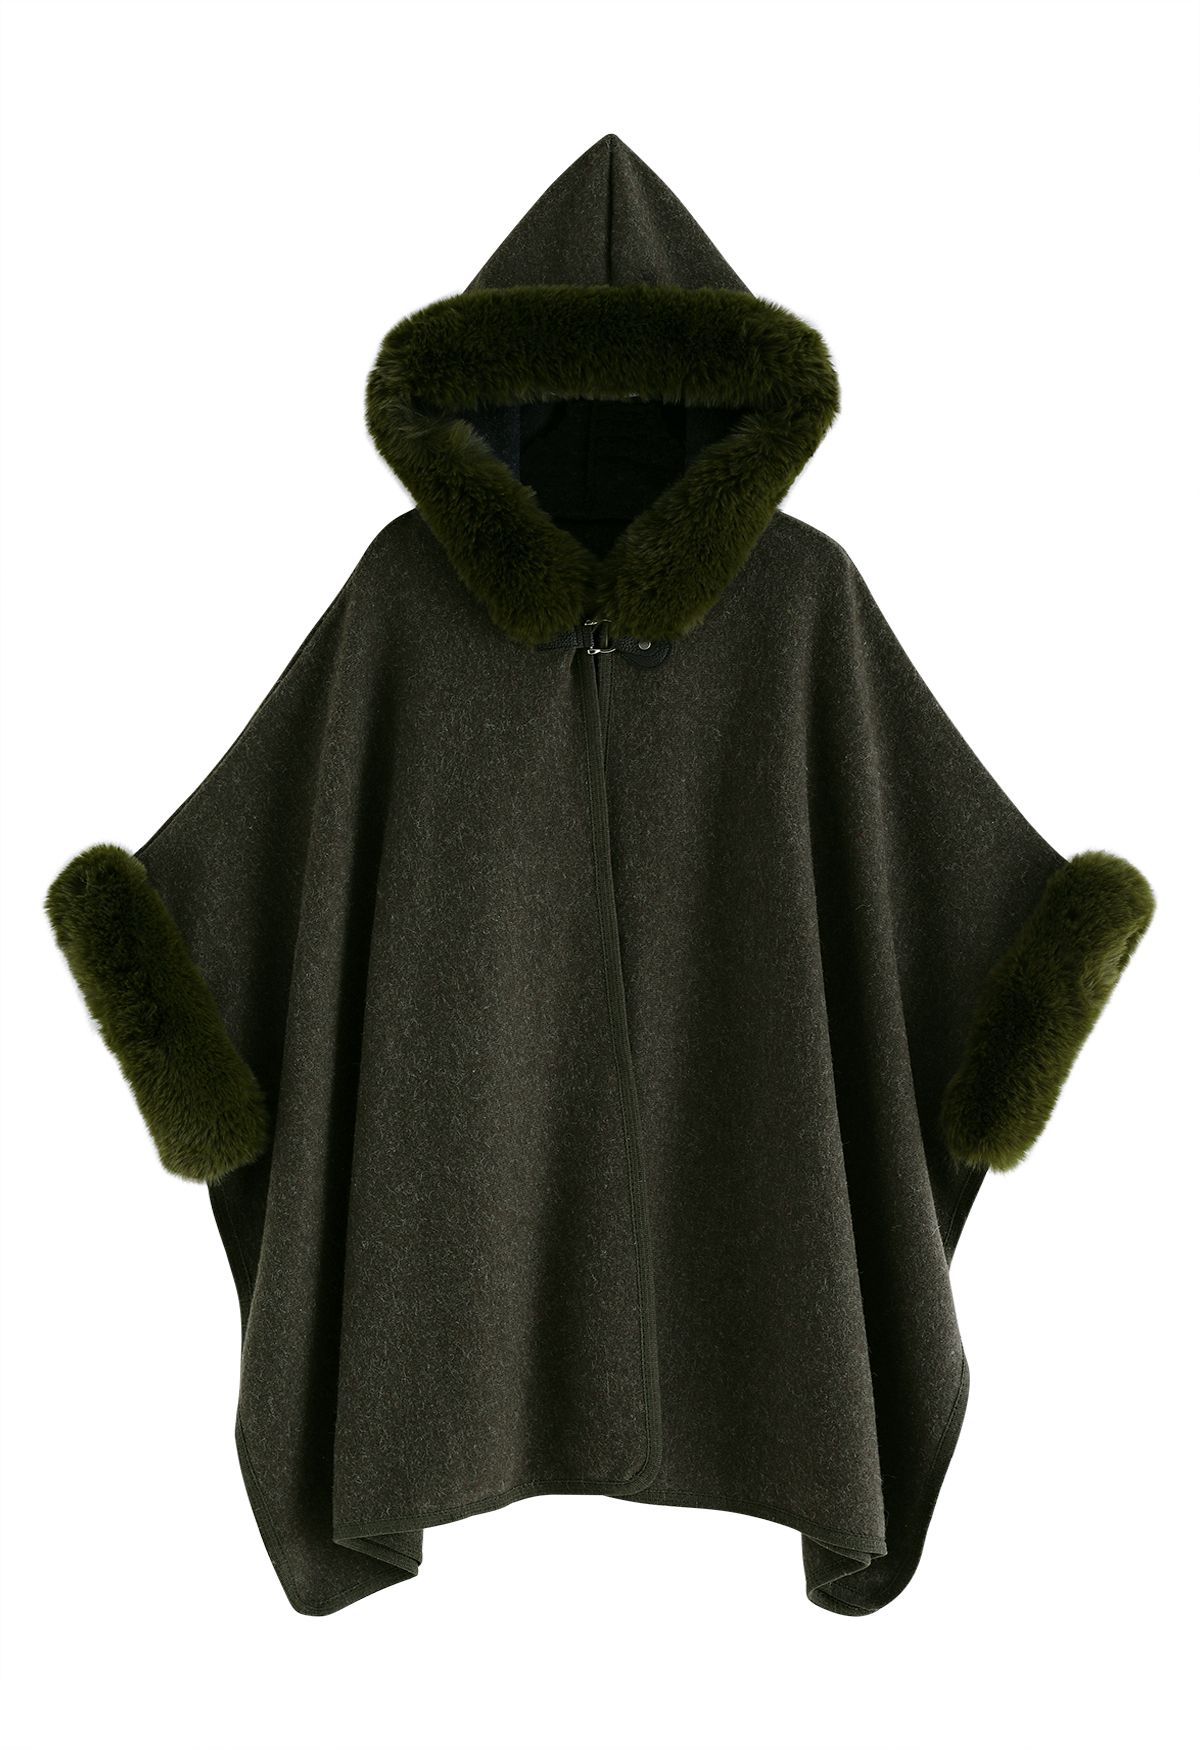 Cozy Faux Fur Hooded Poncho in Dark Green